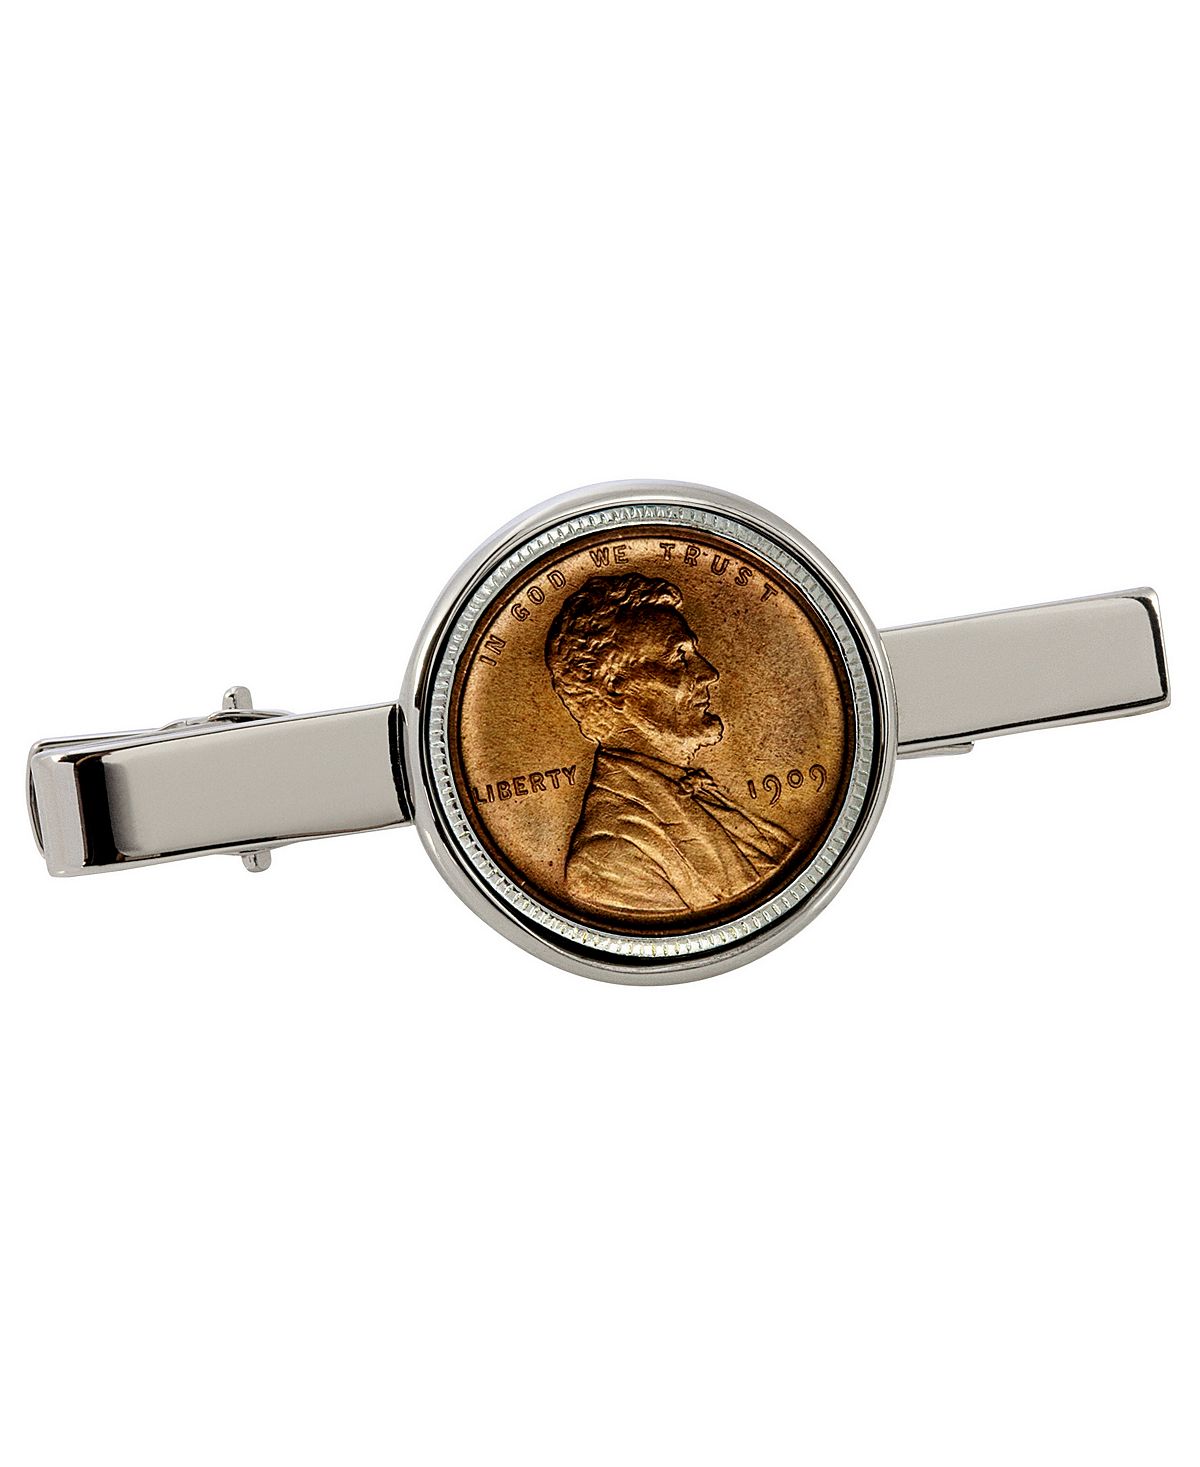 Зажим для галстука для монеты «Линкольн Пенни» первого года выпуска 1909 года American Coin Treasures russia 1898 silver plated brass commemorative collectible coin gift lucky challenge coin